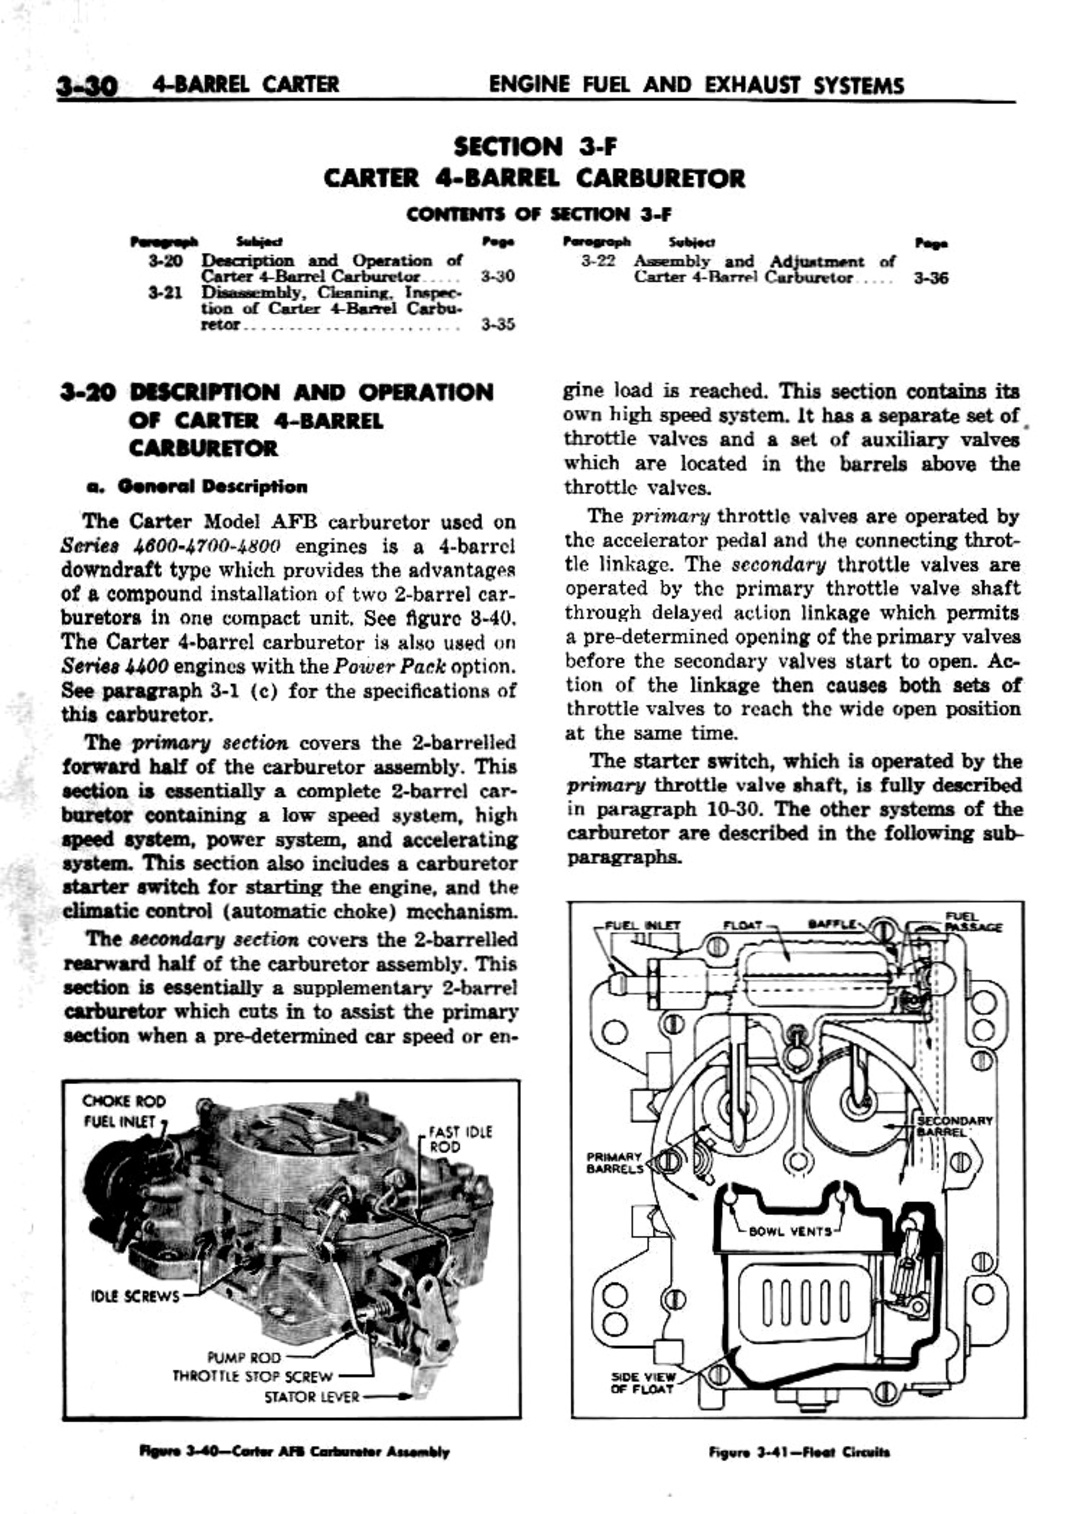 n_04 1959 Buick Shop Manual - Engine Fuel & Exhaust-030-030.jpg